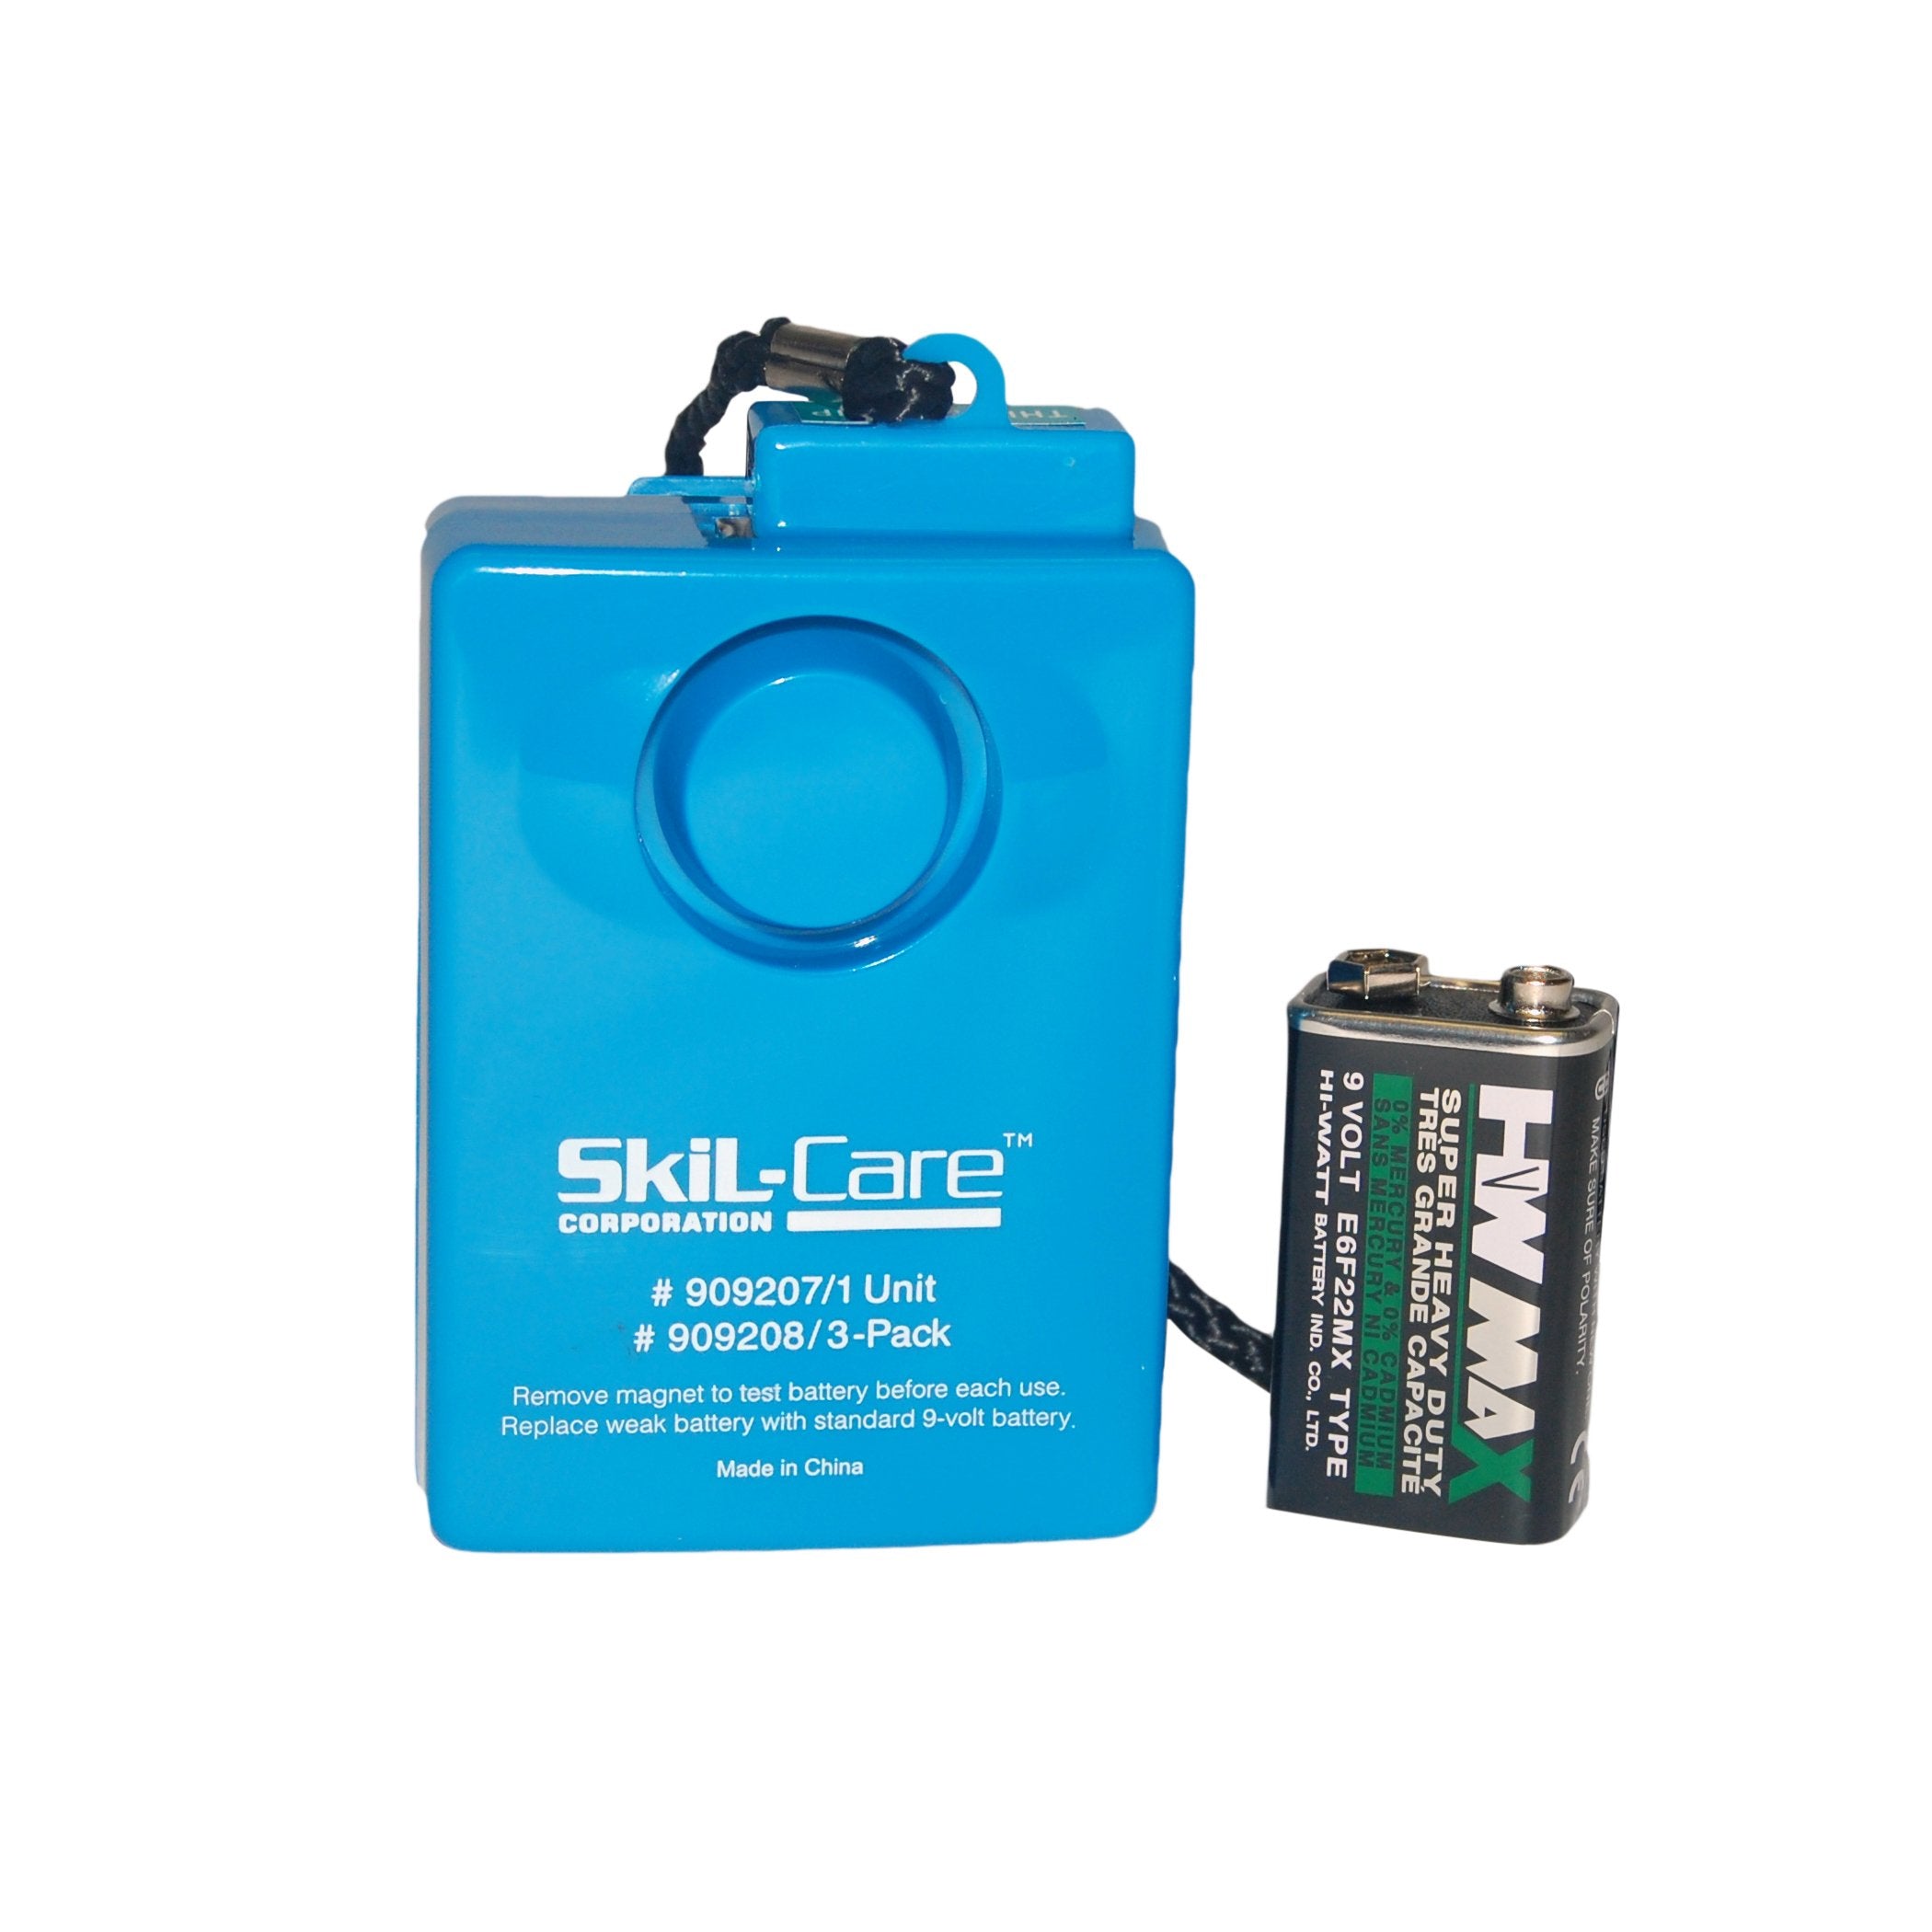 SkiL-Care Econo Alarm System -Each